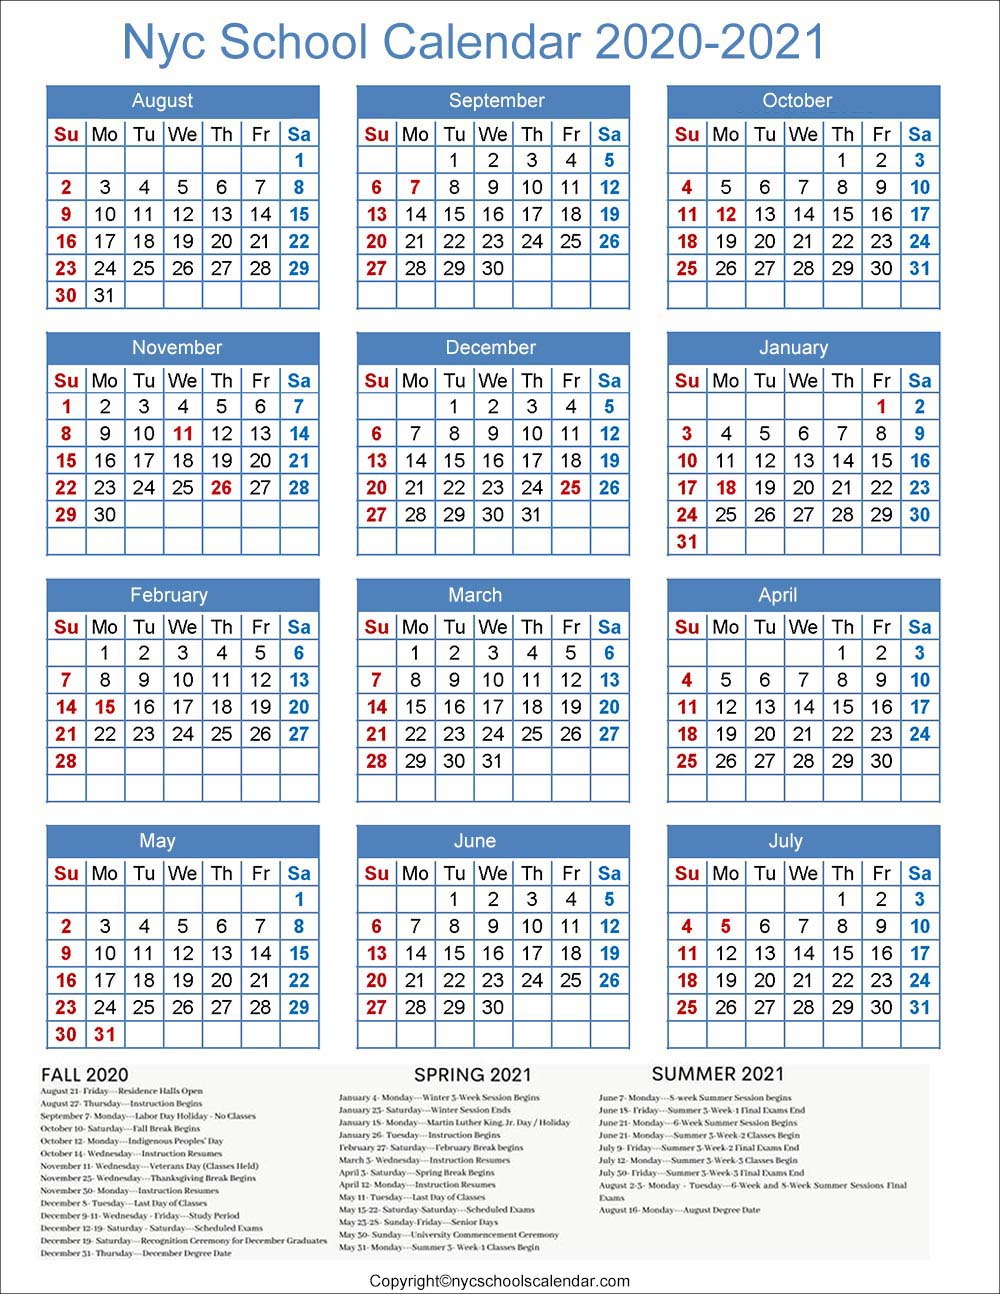 Indian River School District Calendar 2020 2021